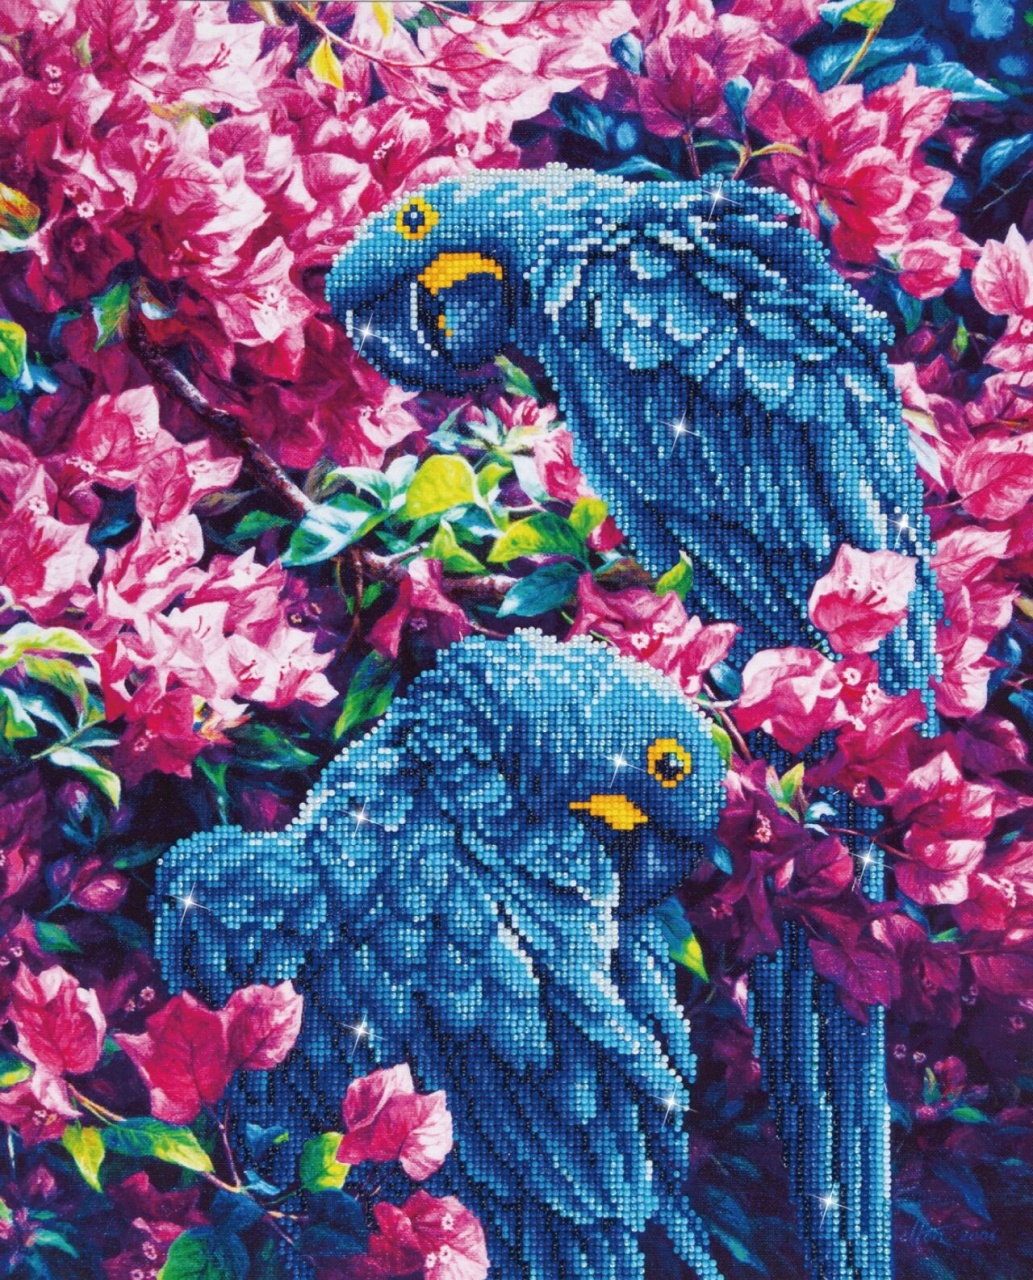 Diamond Dotz Blue Parrots